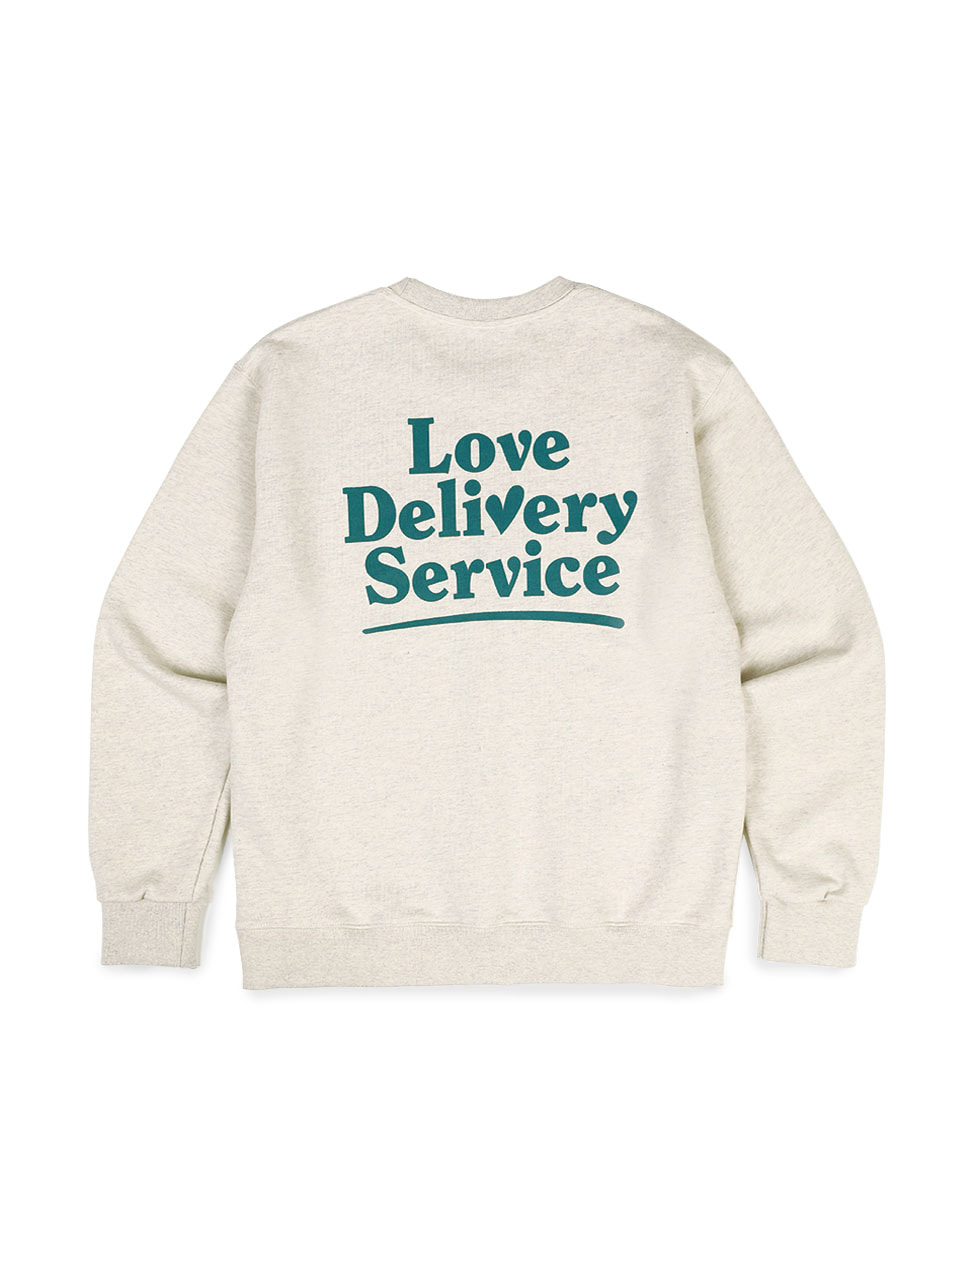 Love delivery service Sweatshirt heather gray (ivory)